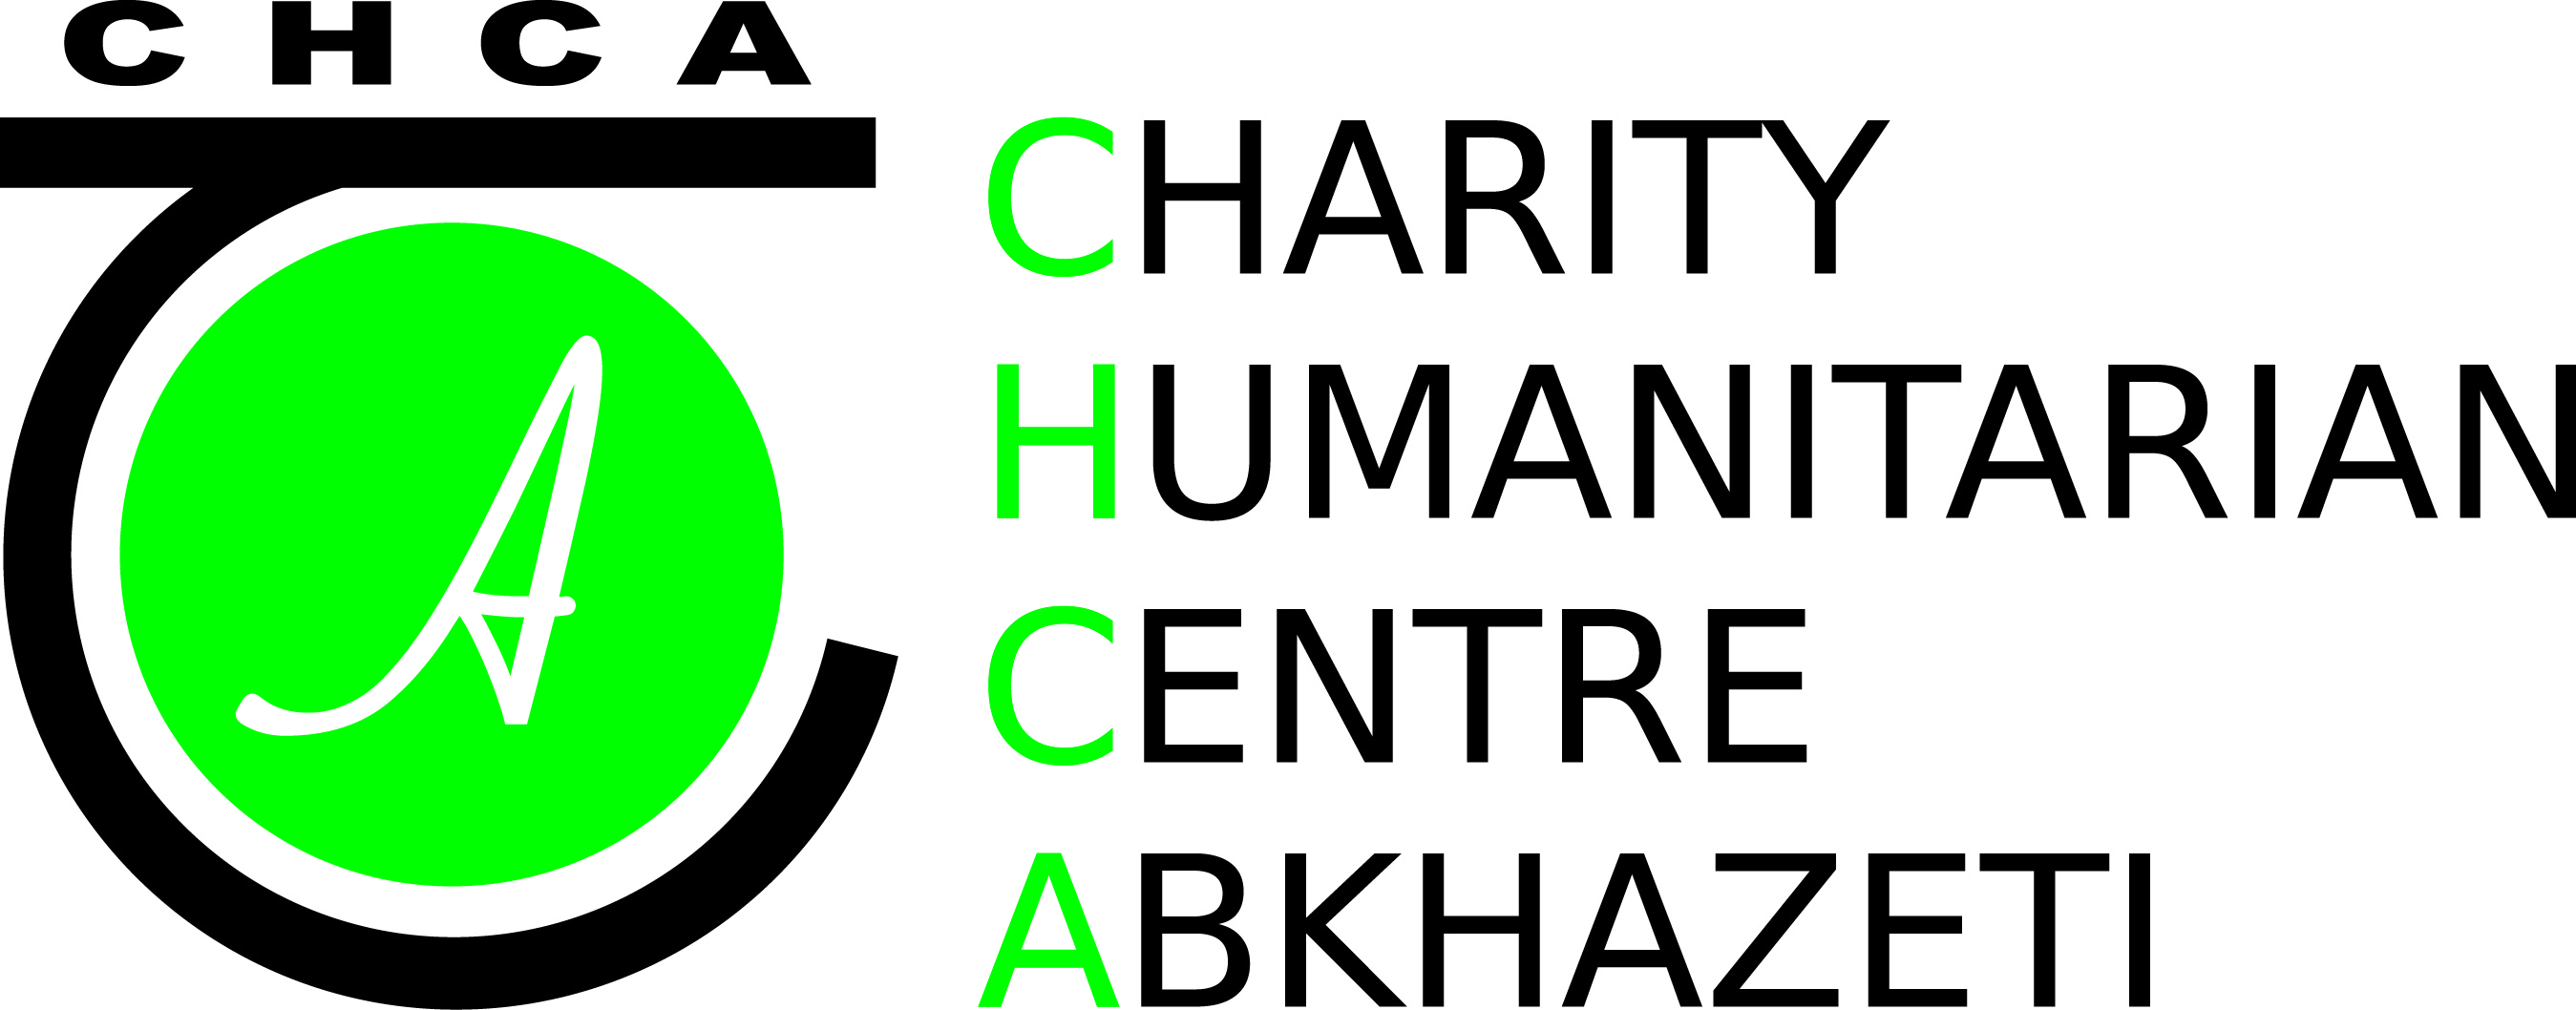 CHCA logo